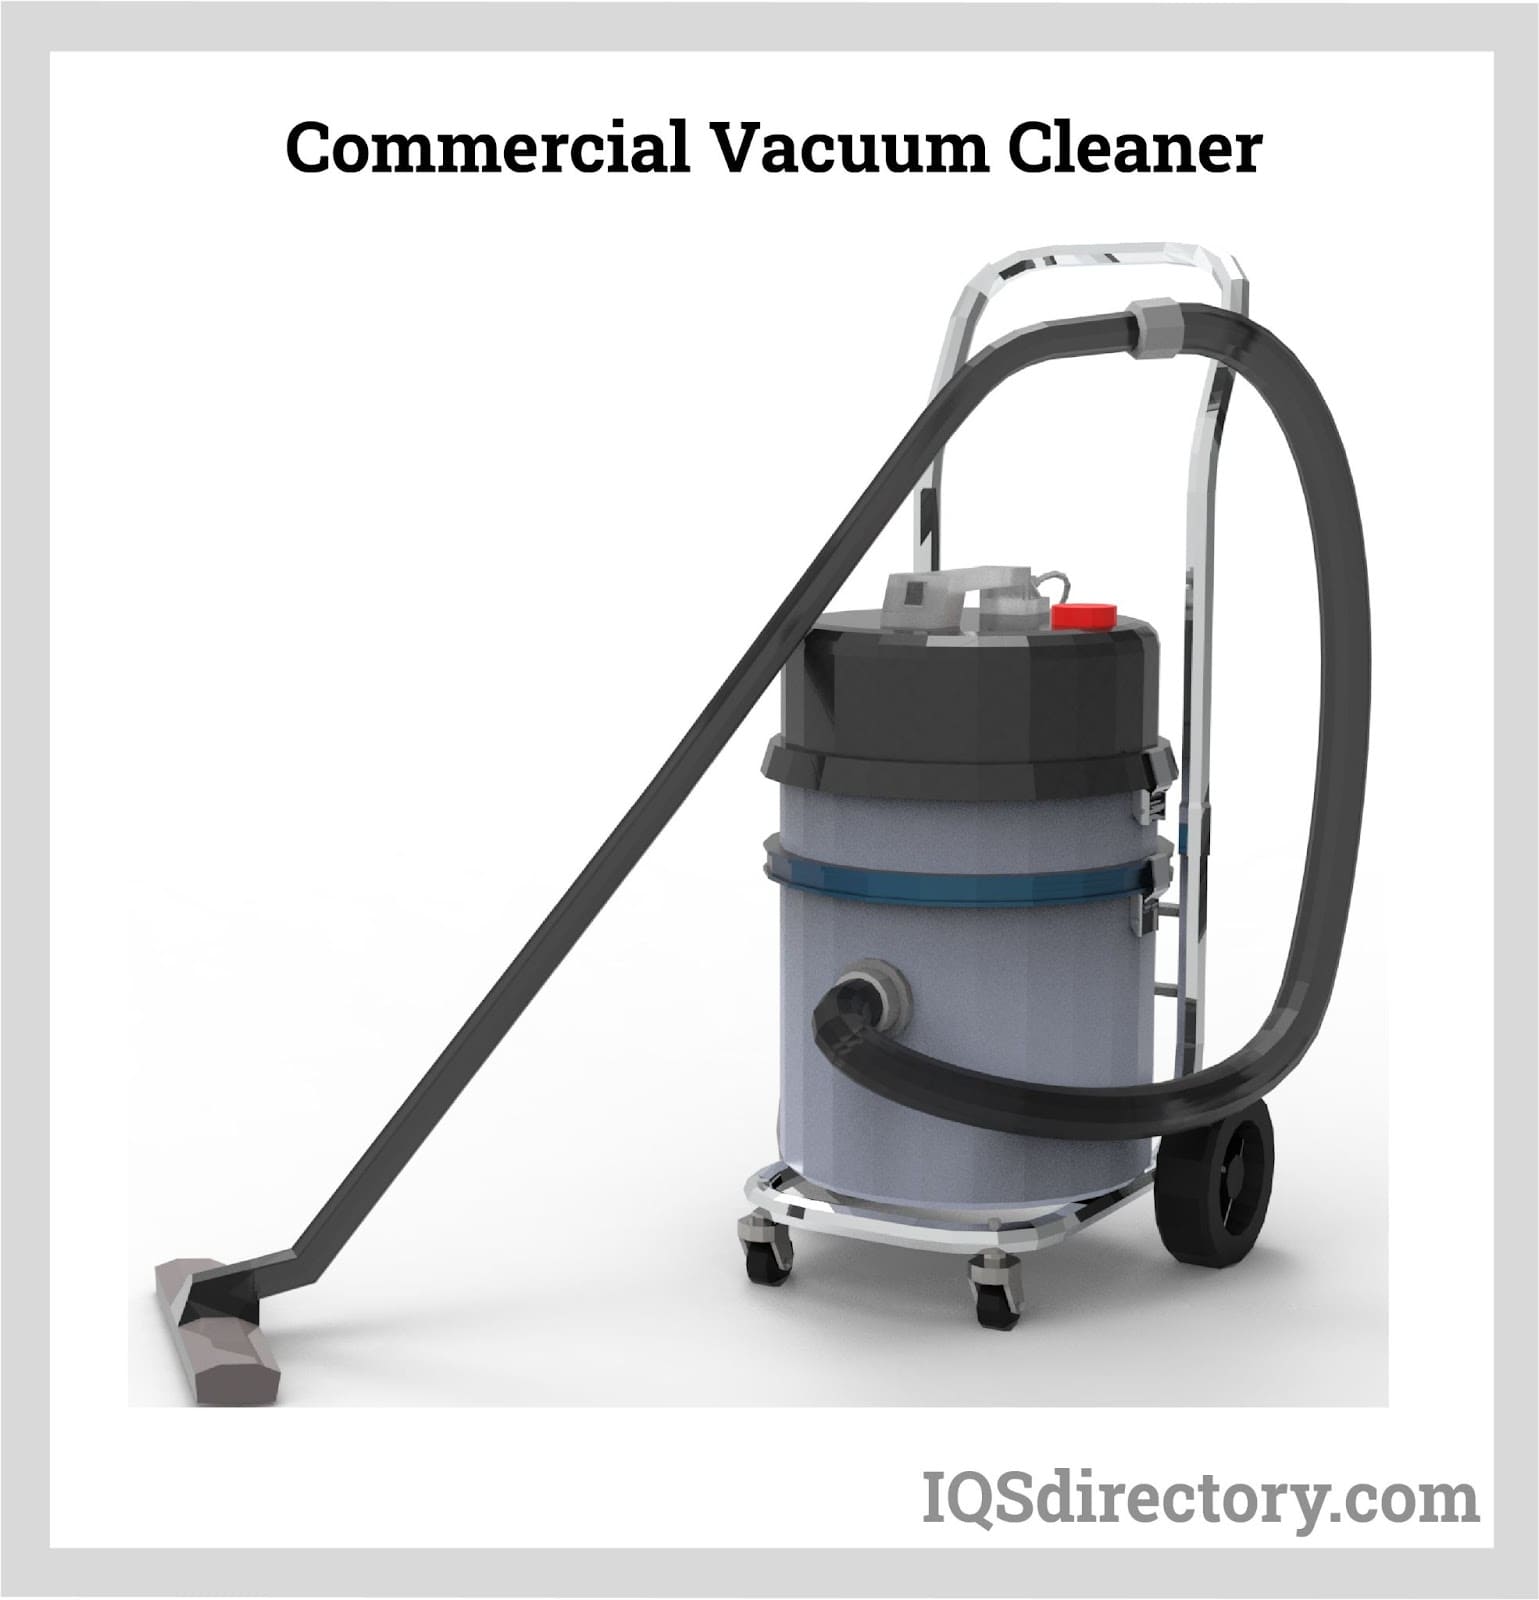 https://www.iqsdirectory.com/articles/vacuum-cleaner/commercial-vacuum-cleaner.jpg